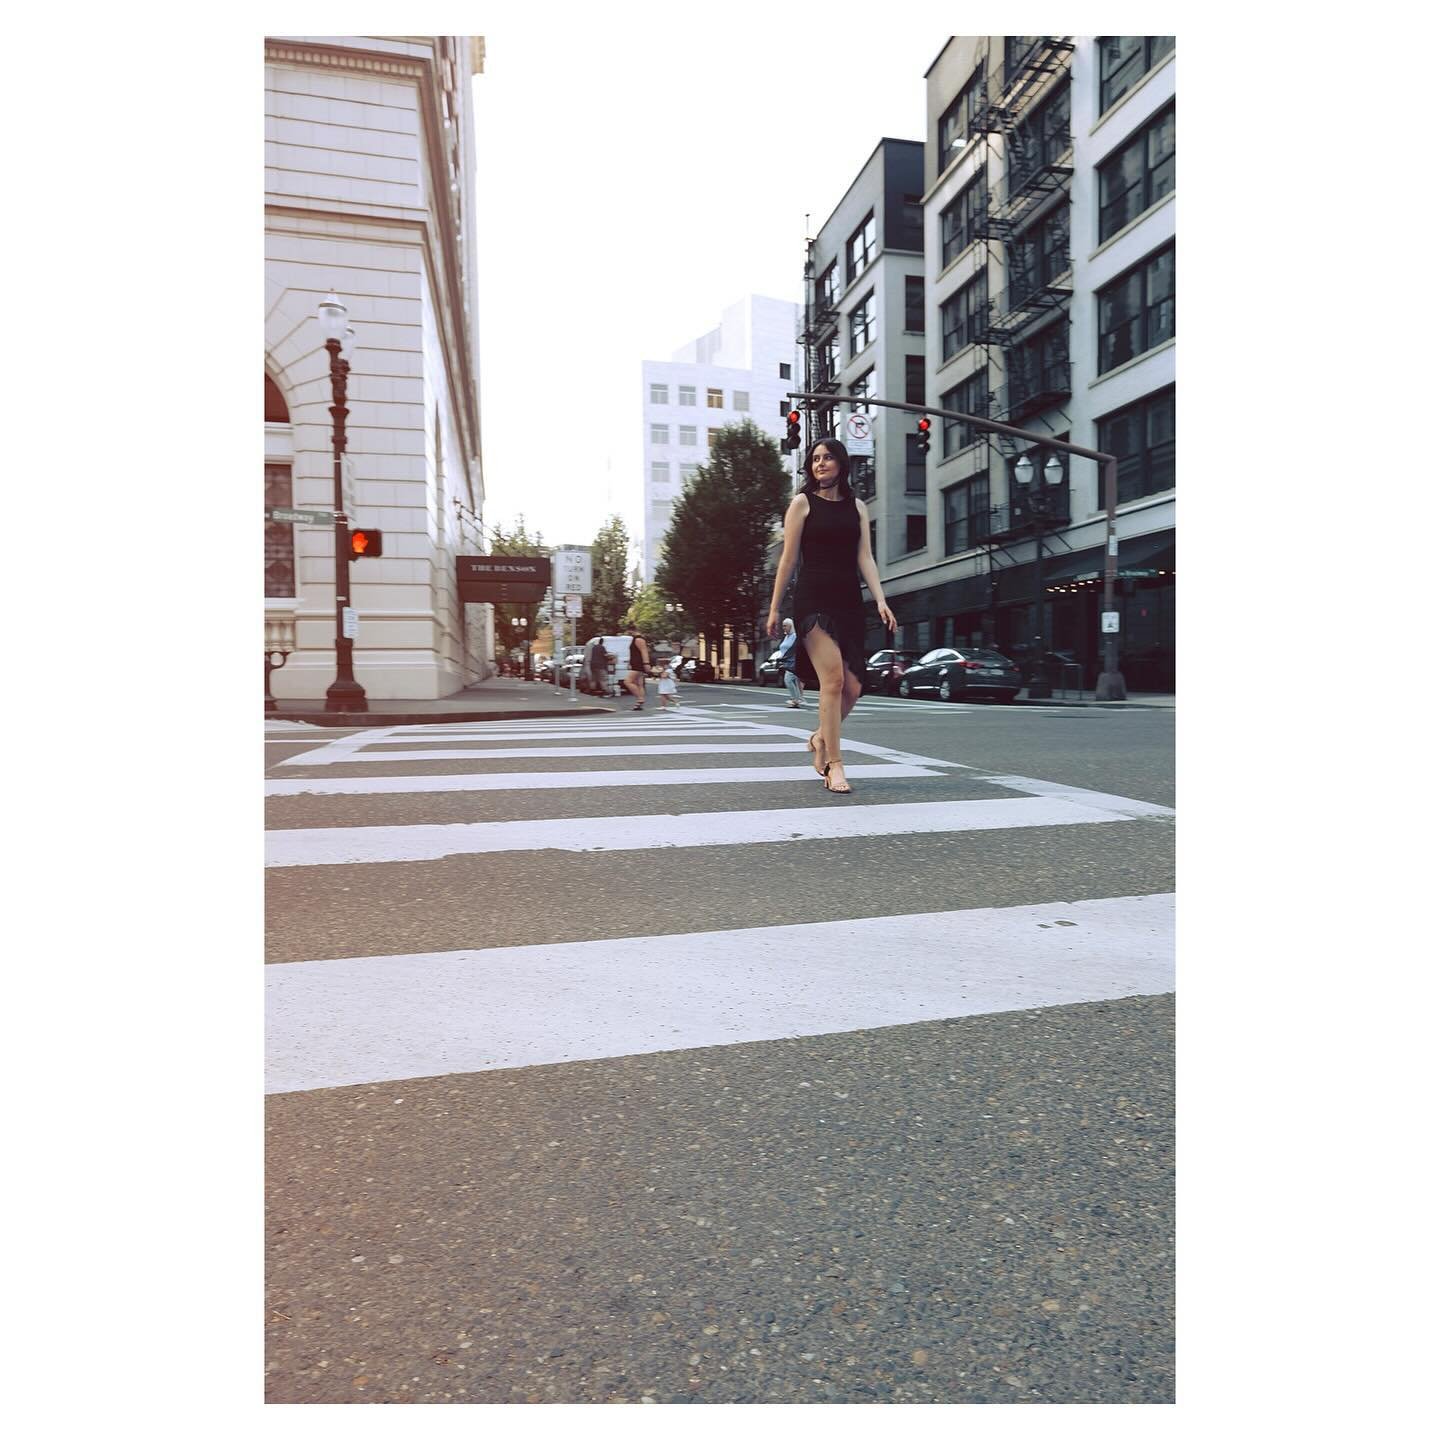 Runway vibes in Portland... Part 2
.
.
.
#downtown #portland #oregon #portlandoregon #portlandphotographer #portraitphotography #streetphotography #editorial #photographer
#photooftheday #photoshoot #insta #instagood #instaphoto #instafashion #fashio